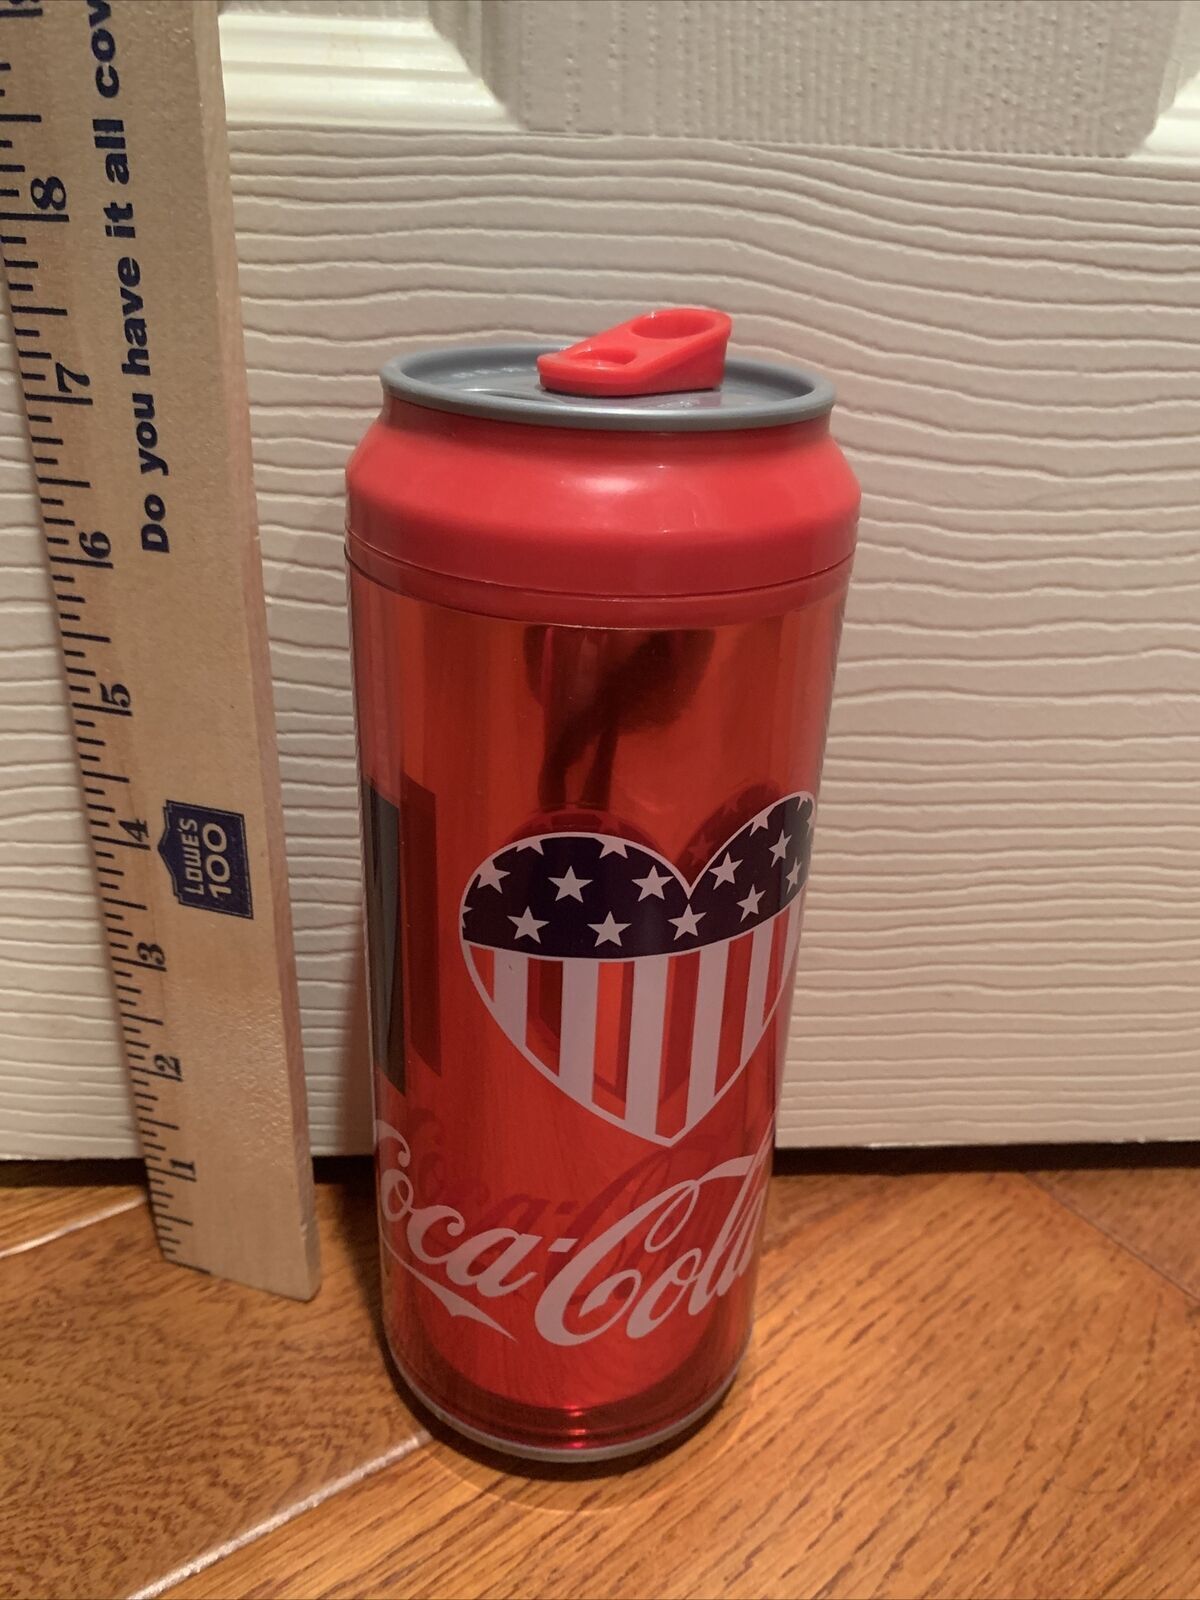 Cool Gear Coca Cola Collectible Tumbler "I Heart Coca cola" American flag Heart 